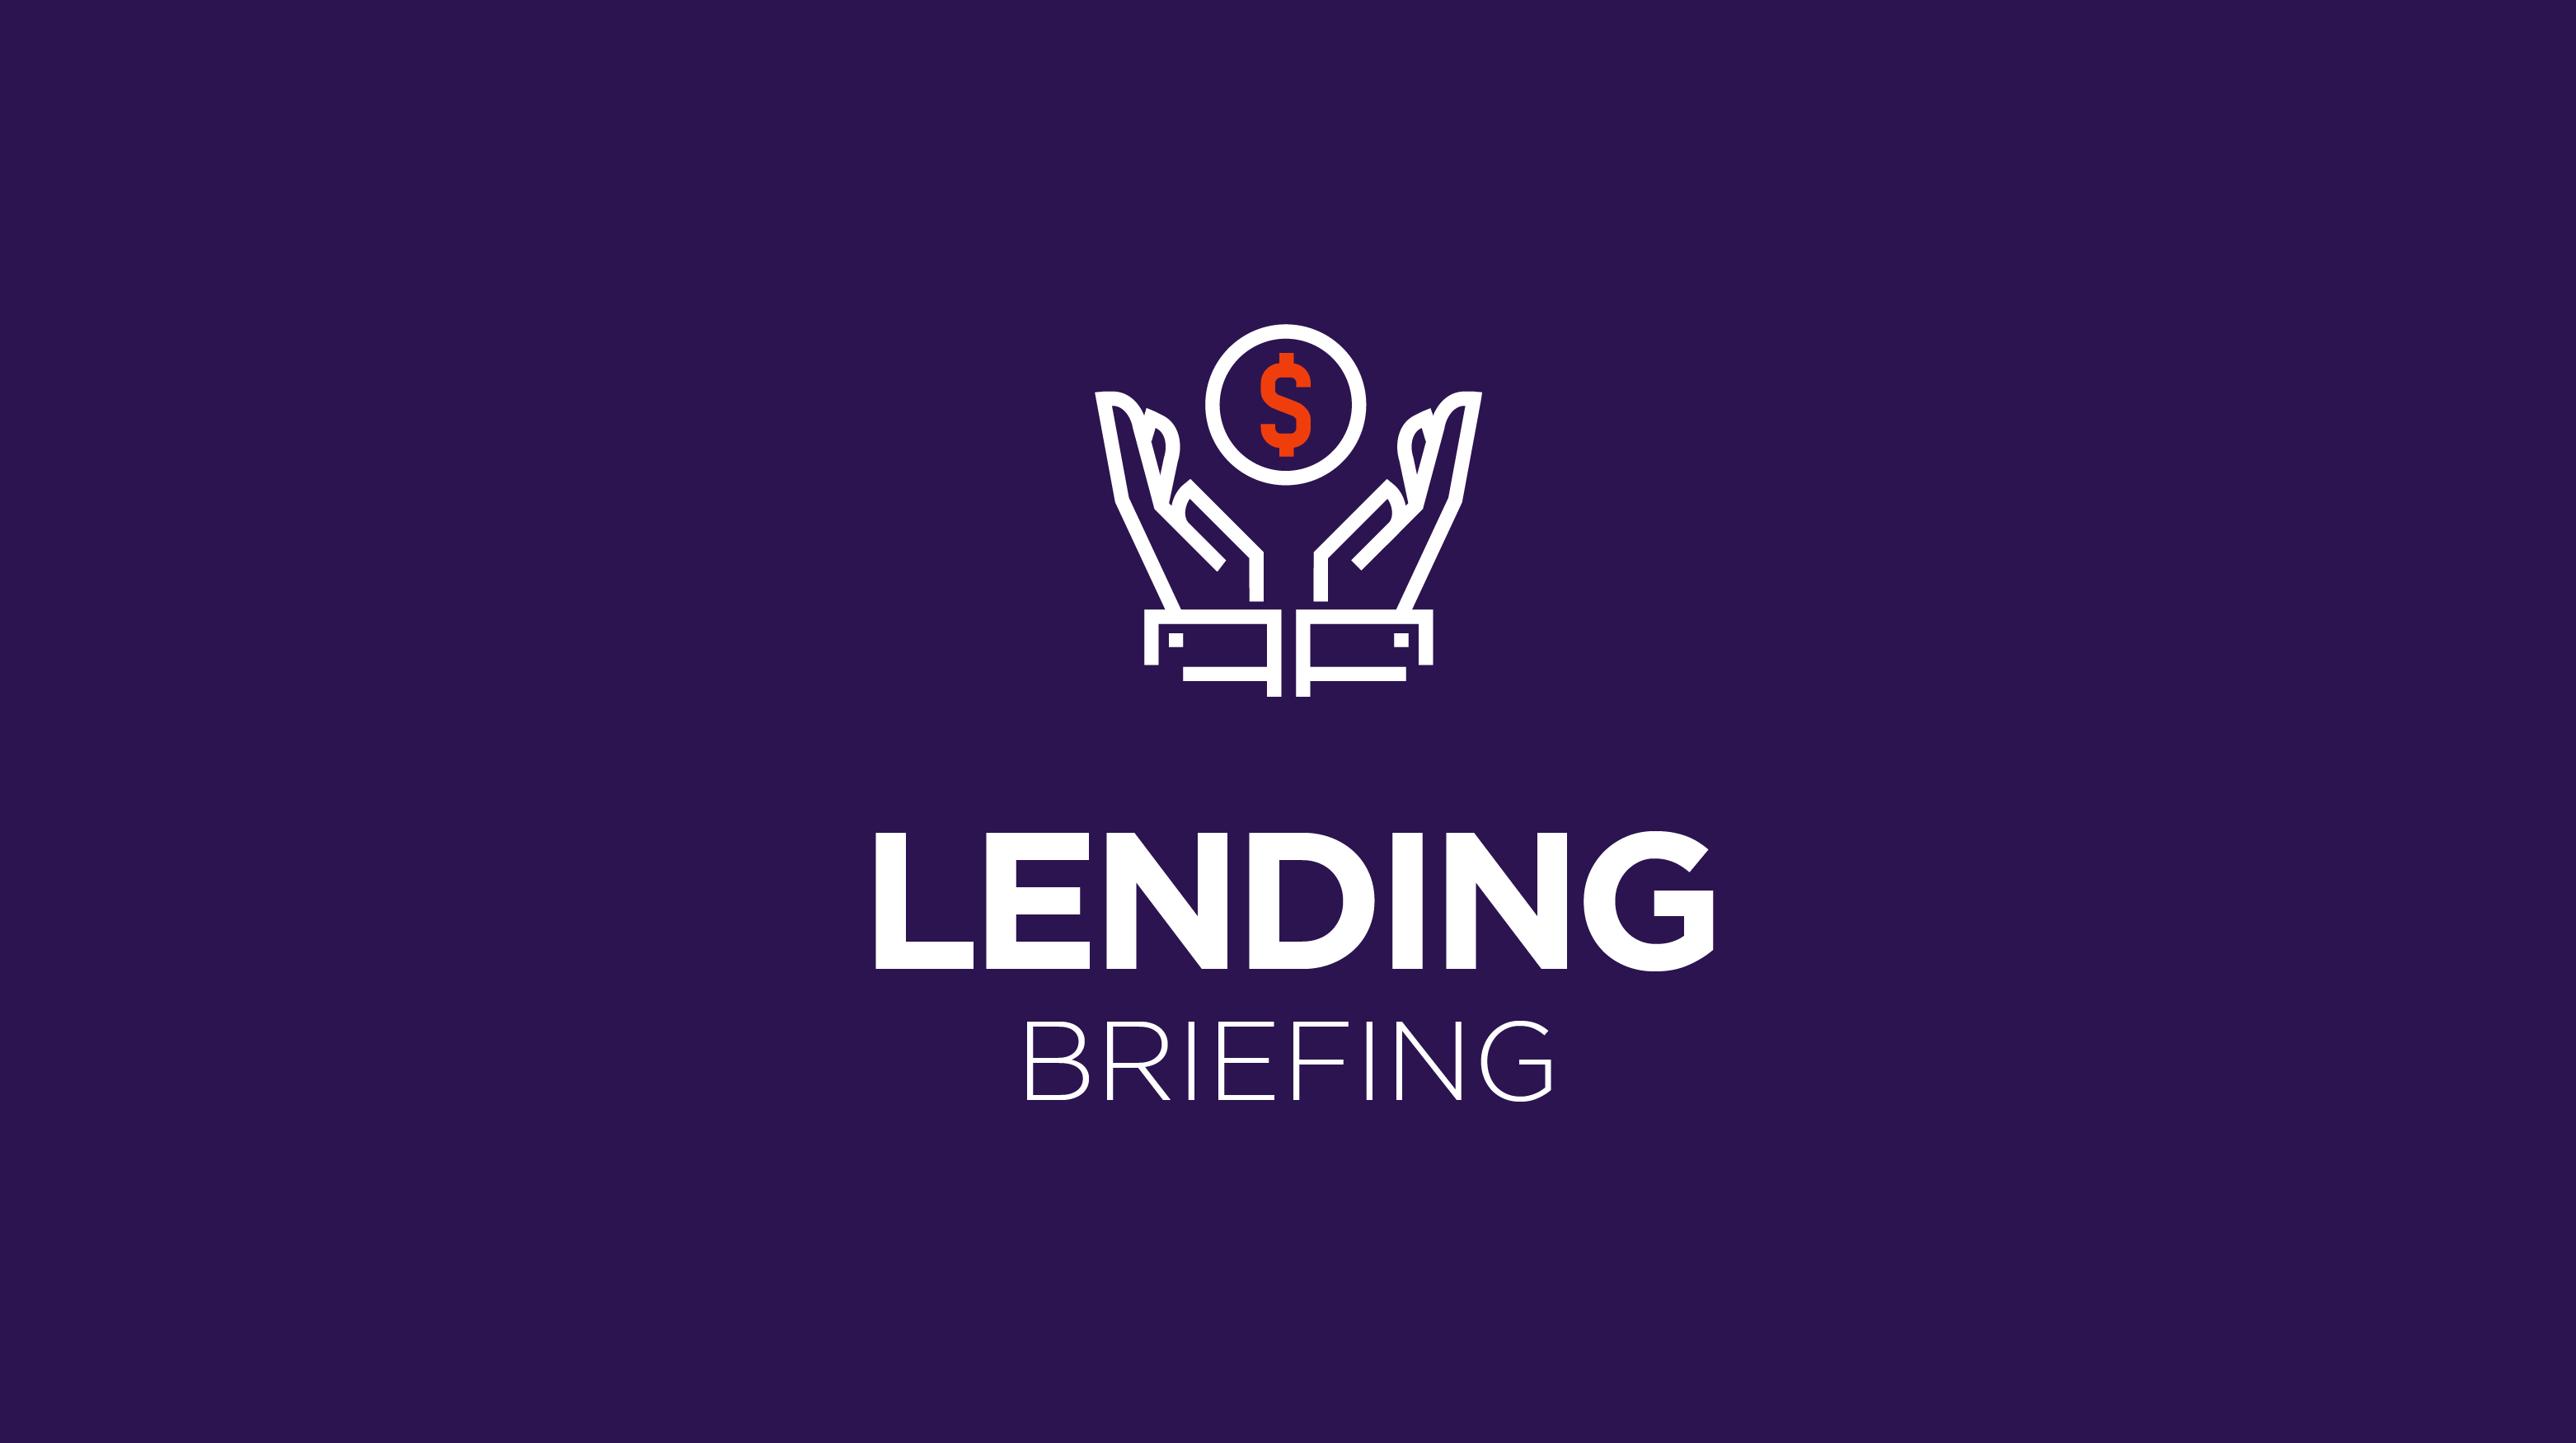 Lending Briefing: Digital lending profitability and underwriting discipline